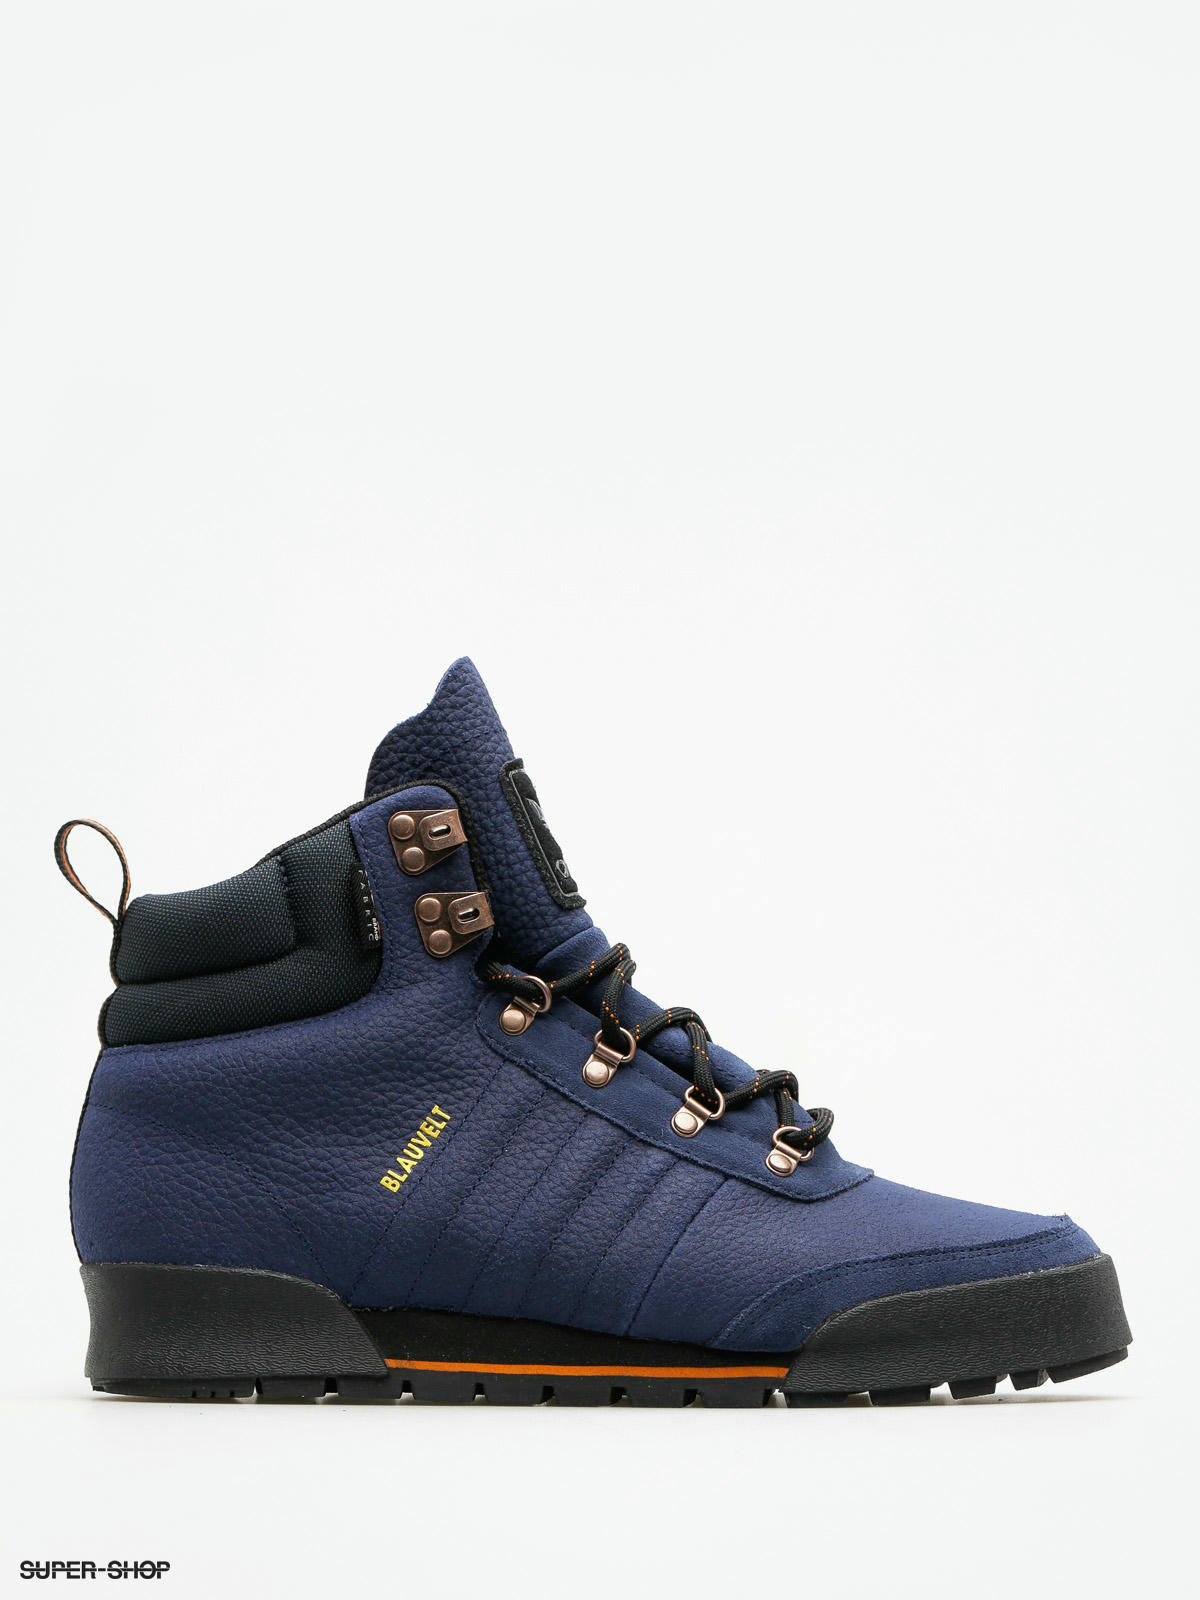 adidas Winter shoes Jake 2.0 (conavy/custom/cblack)